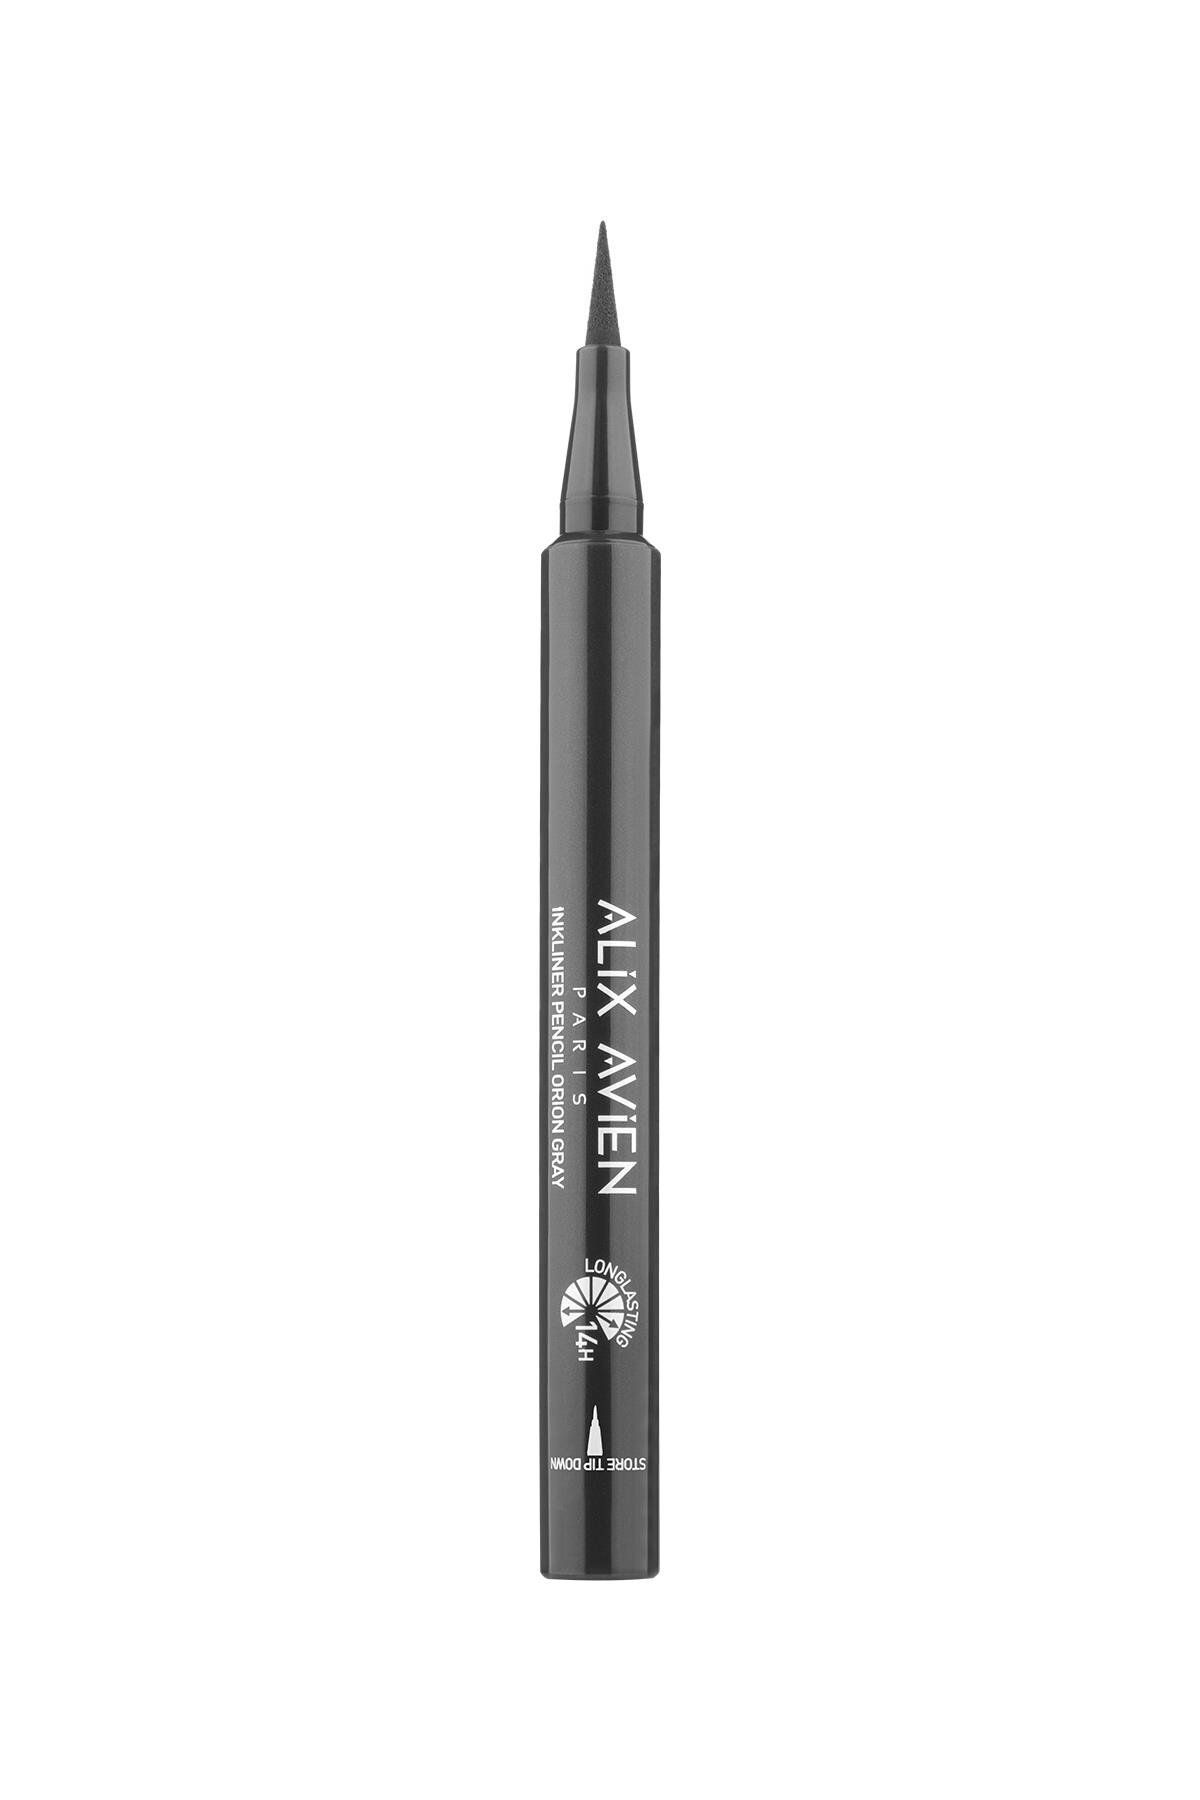 Alix Avien Inkliner Pencil Orion Gray - Eyeliner Ekstra Orion Grisi - Yoğun Renk Veren 14 Saat Kalıcı Etki